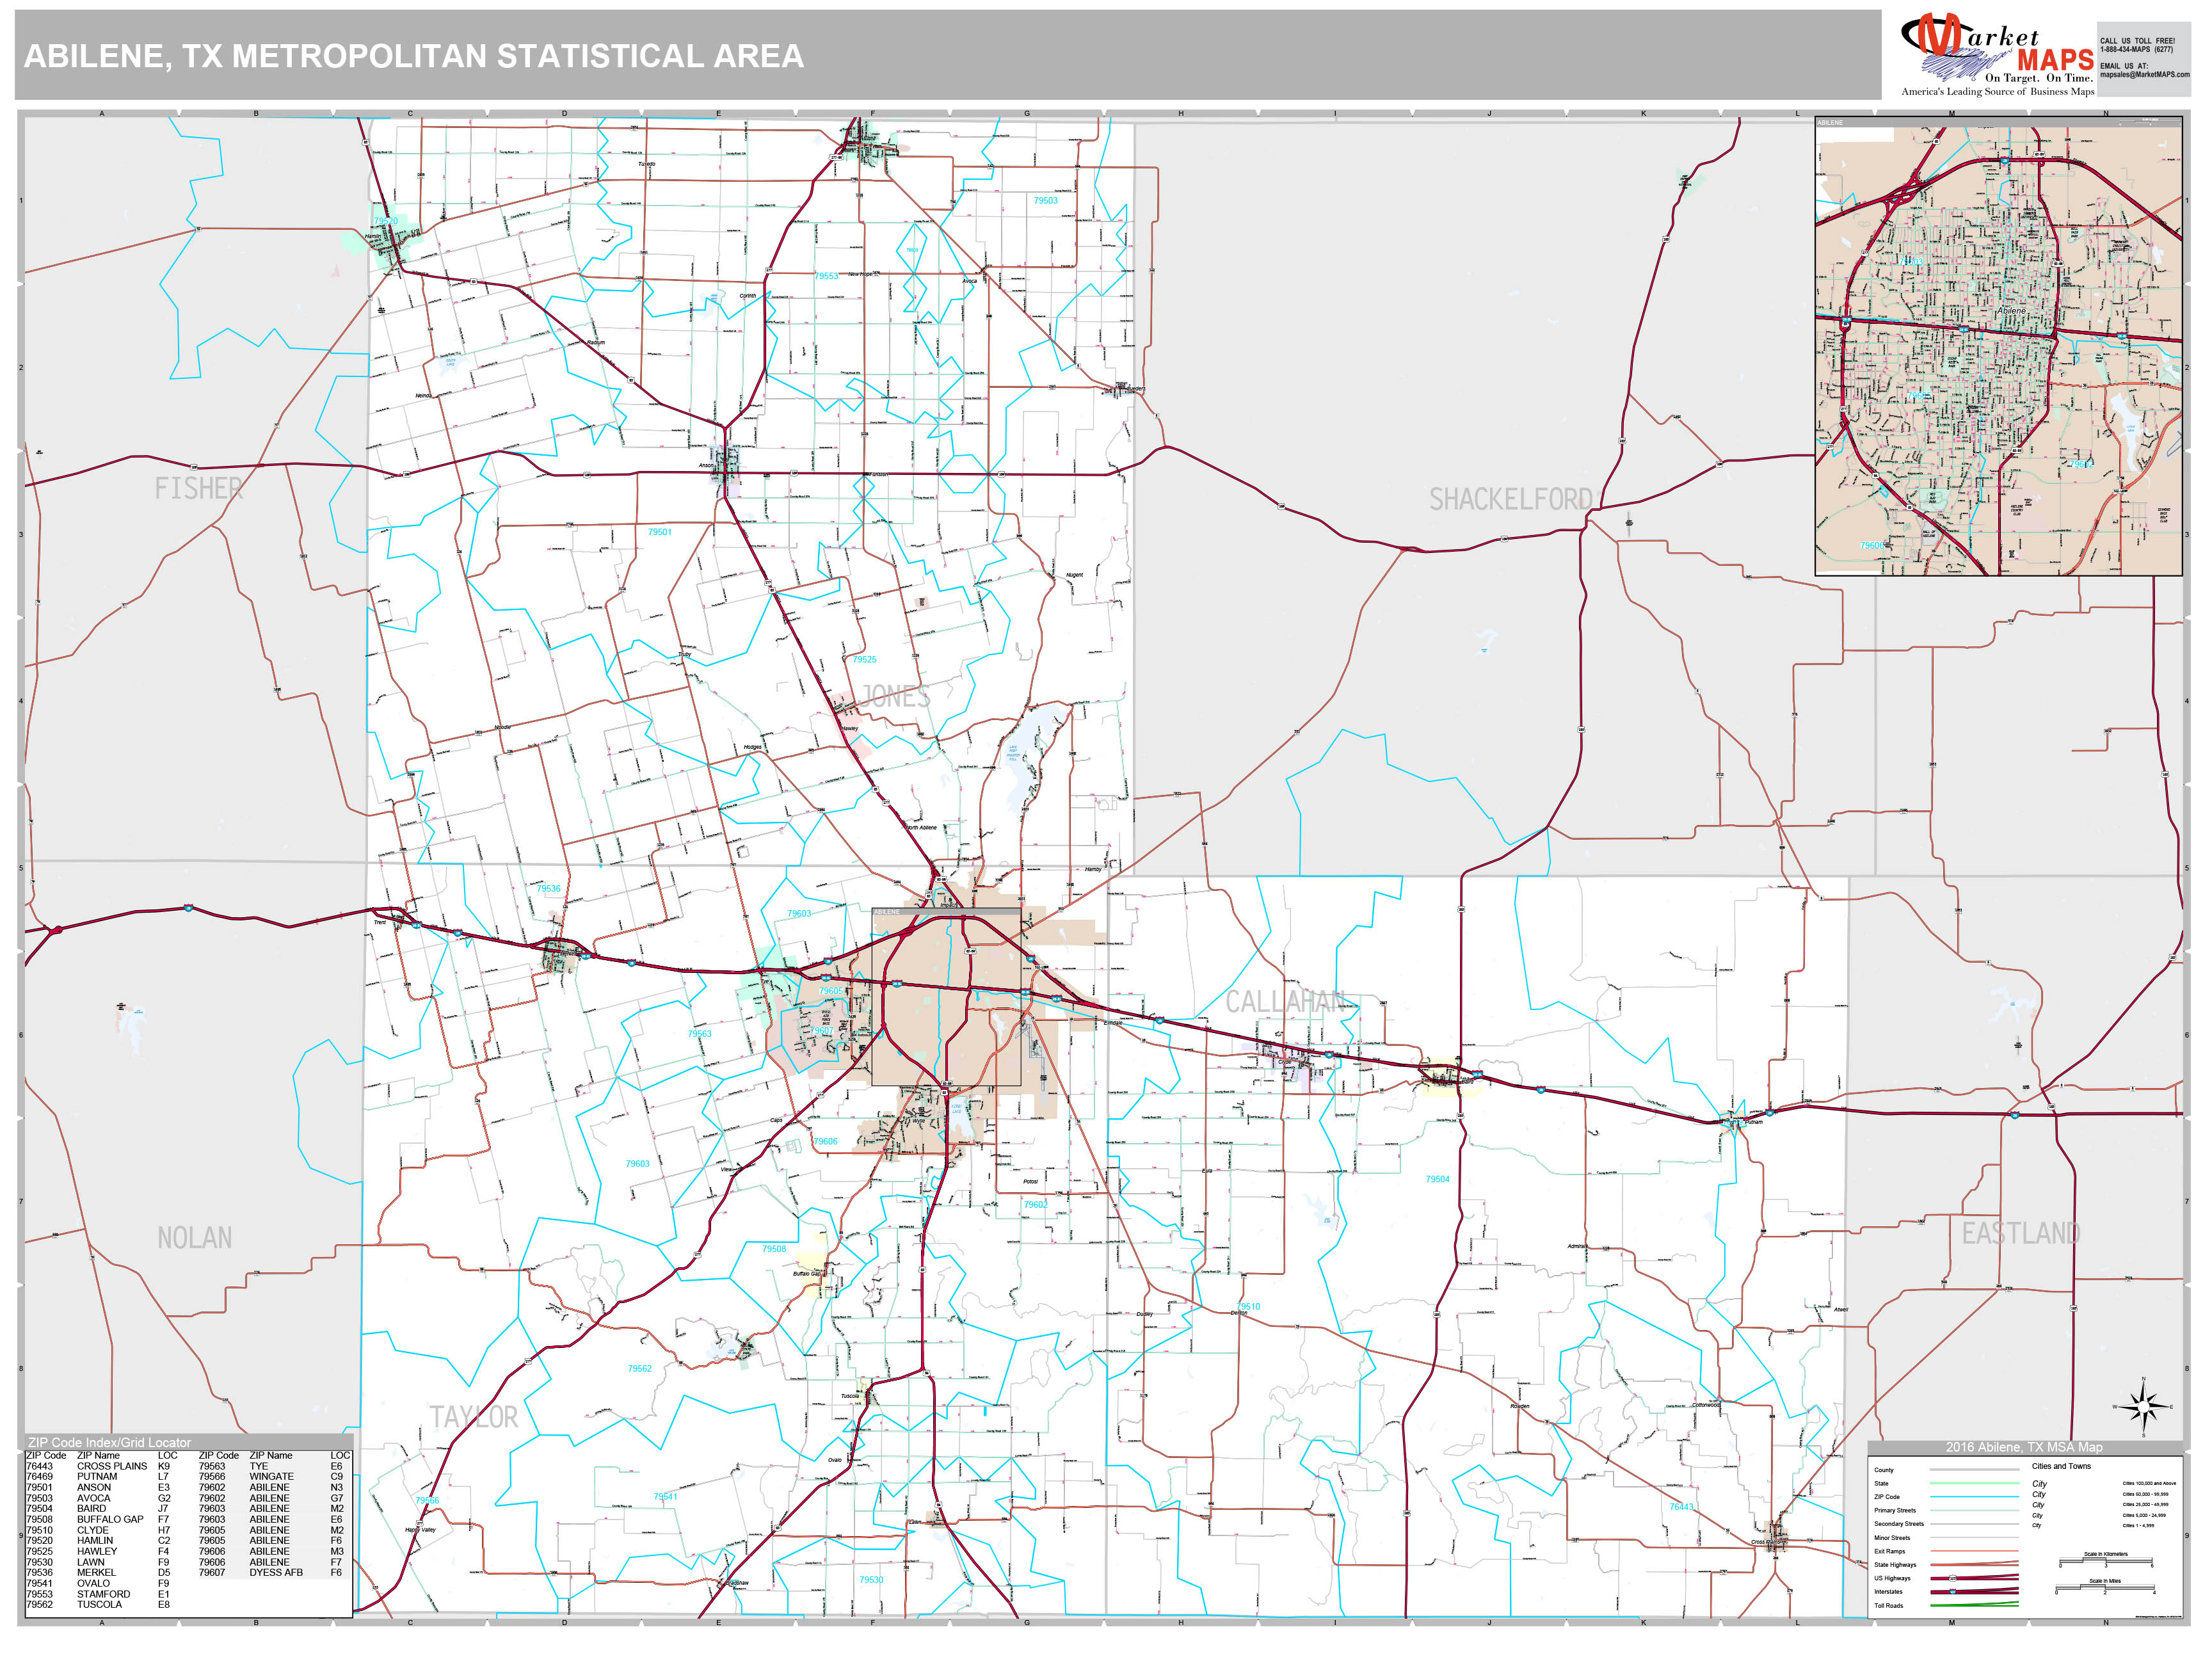 Abilene, TX Metro Area Wall Map Premium Style by MarketMAPS MapSales